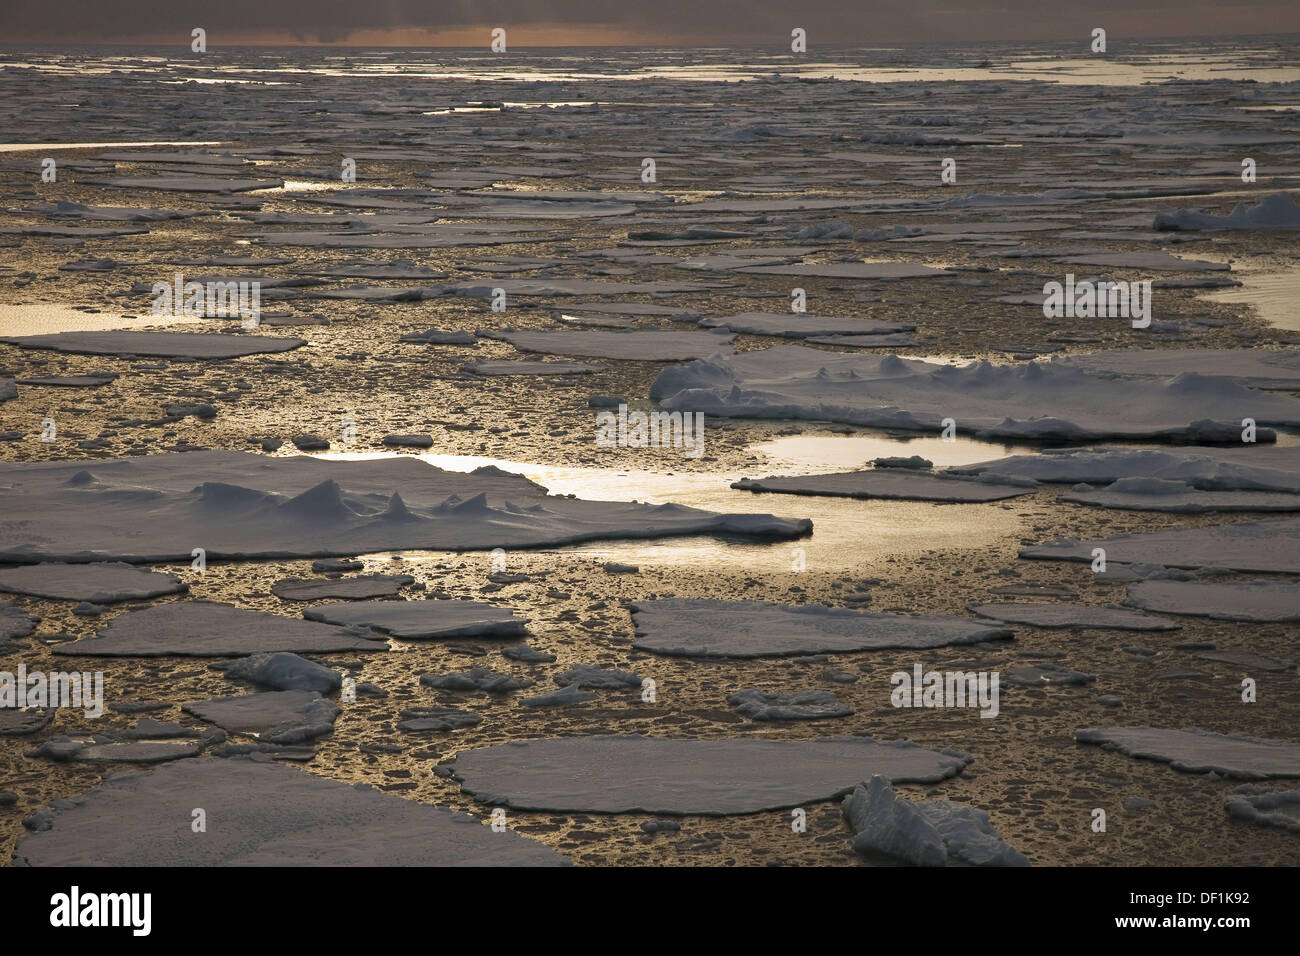 La banchisa al tramonto, vicino ghiacciaio Mertz, Oceano Meridionale, Est Antartide Foto Stock